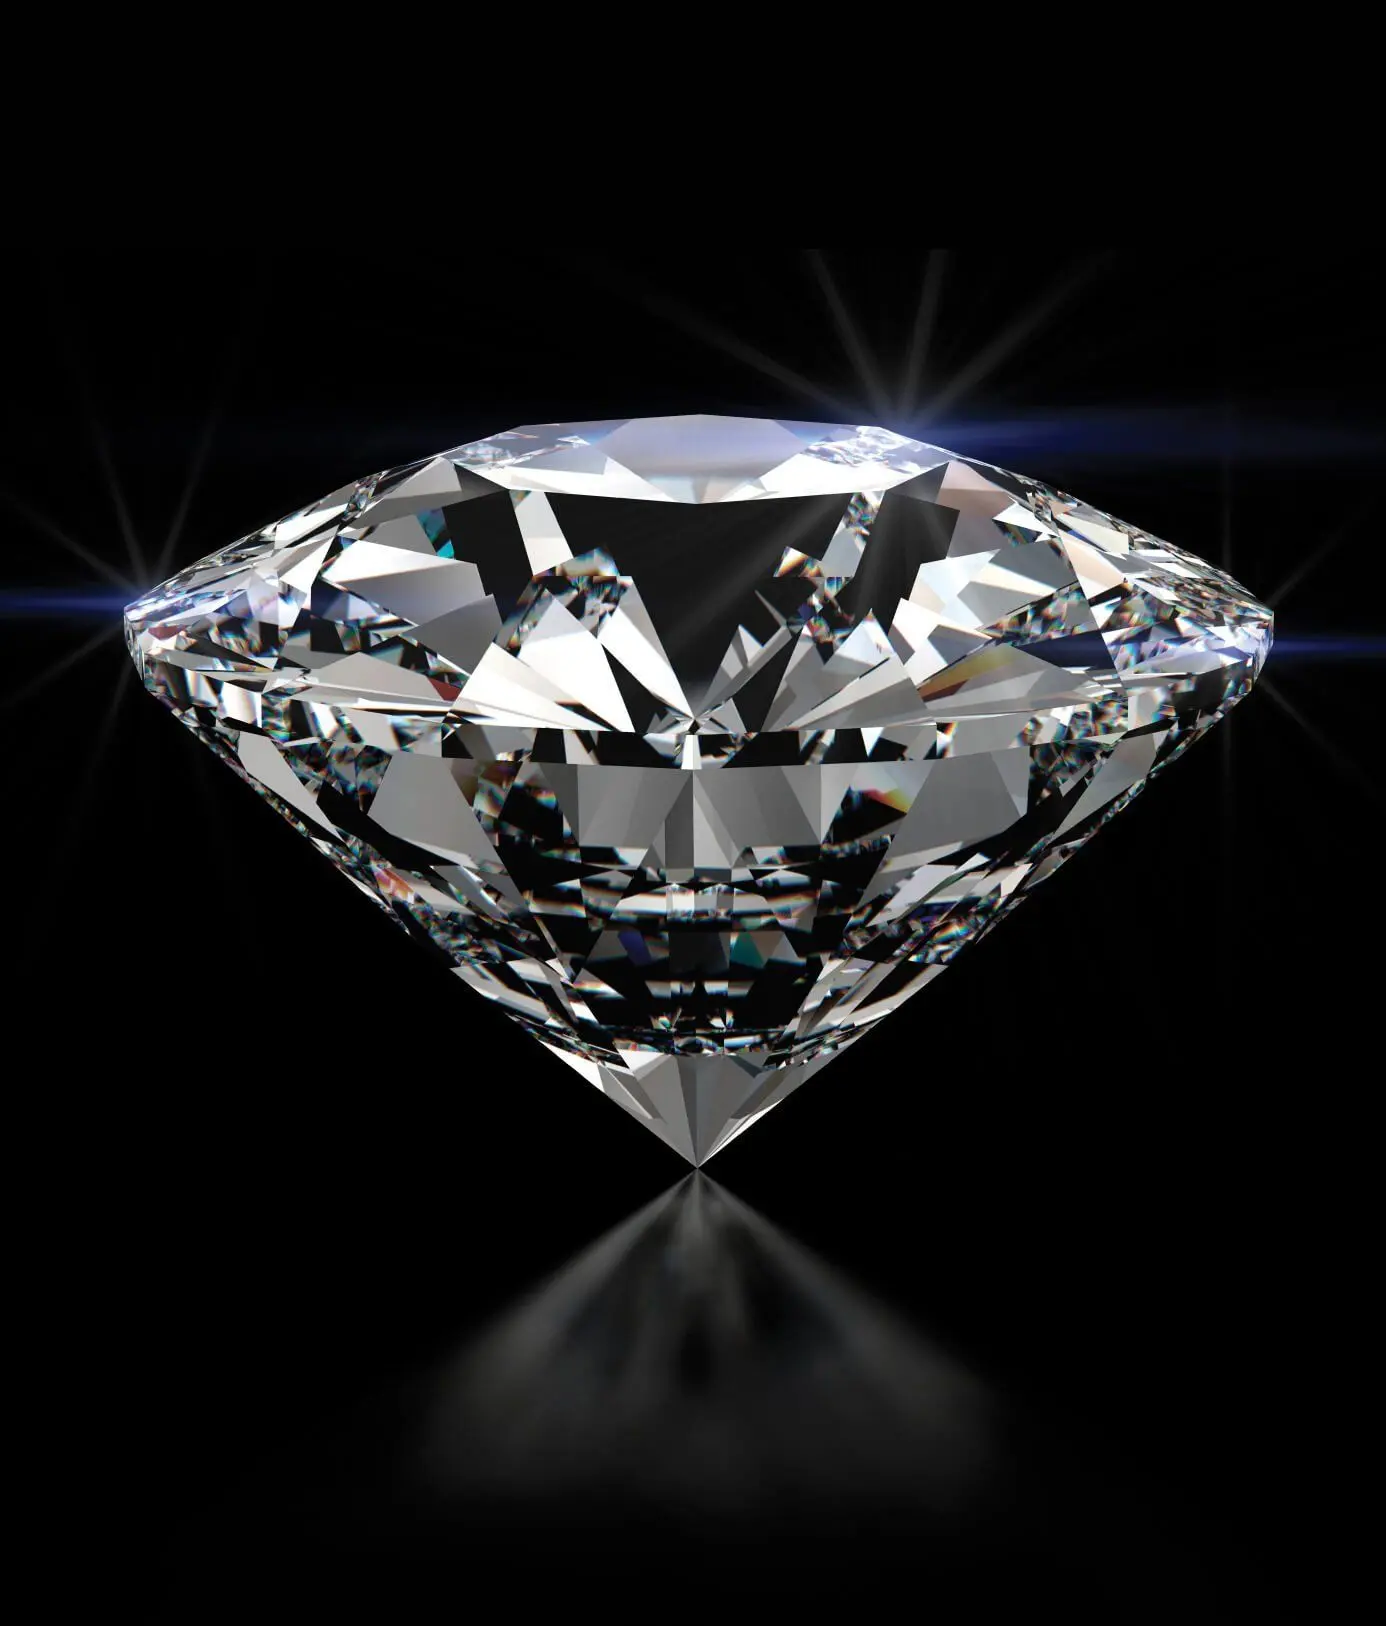 11 مرکز تجارت الماس در جهان